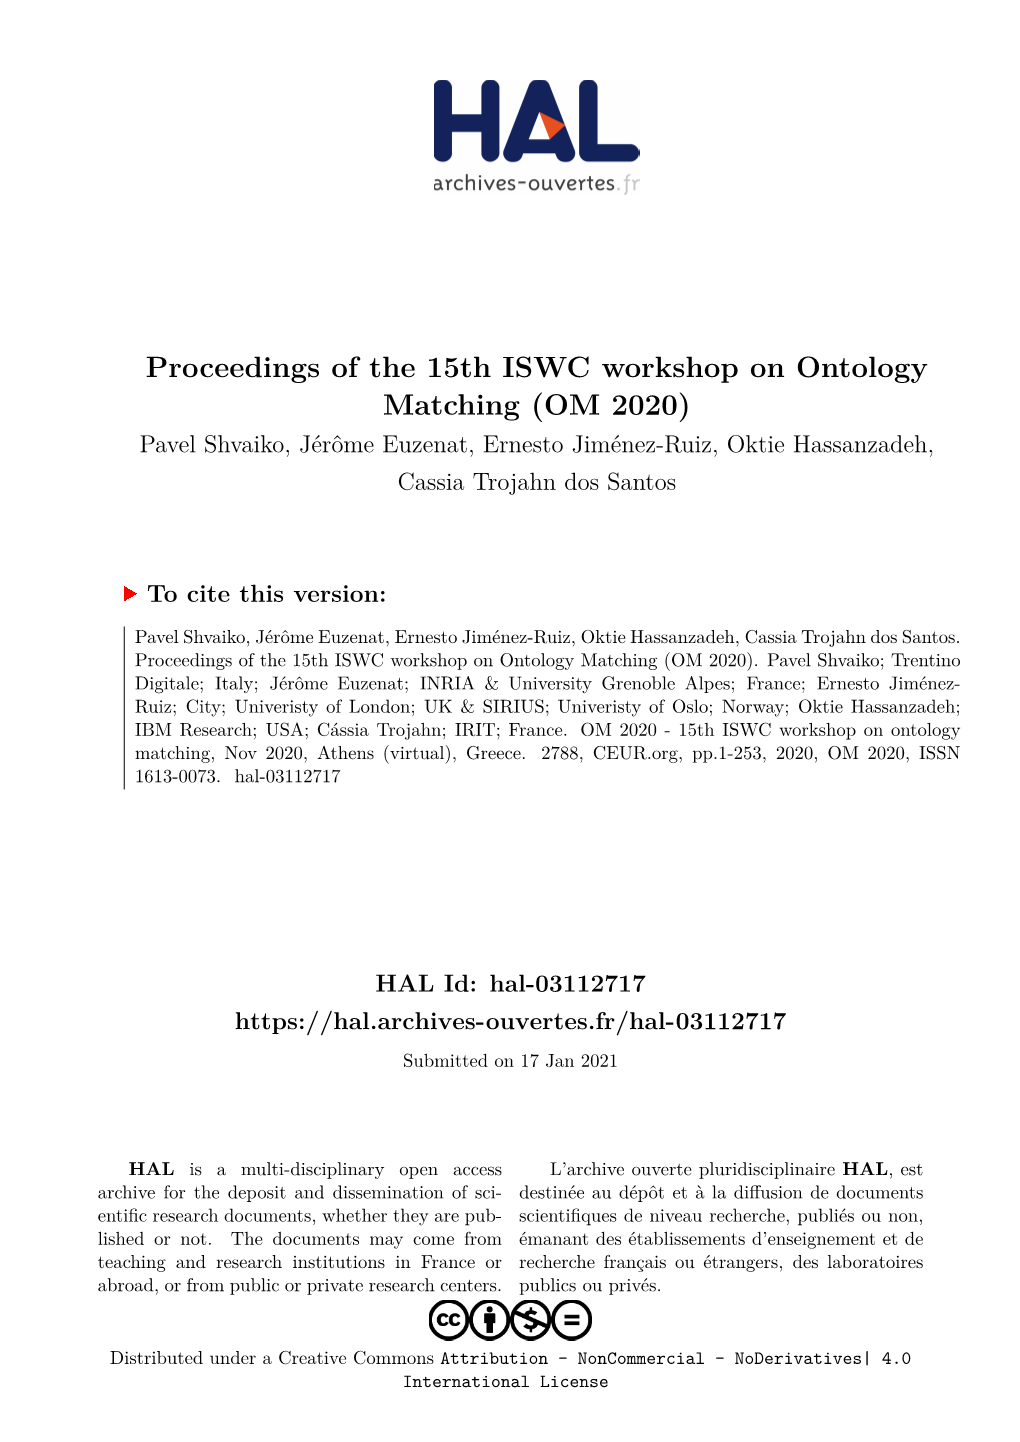 Proceedings of the 15Th ISWC Workshop on Ontology Matching (OM 2020) Pavel Shvaiko, Jérôme Euzenat, Ernesto Jiménez-Ruiz, Oktie Hassanzadeh, Cassia Trojahn Dos Santos